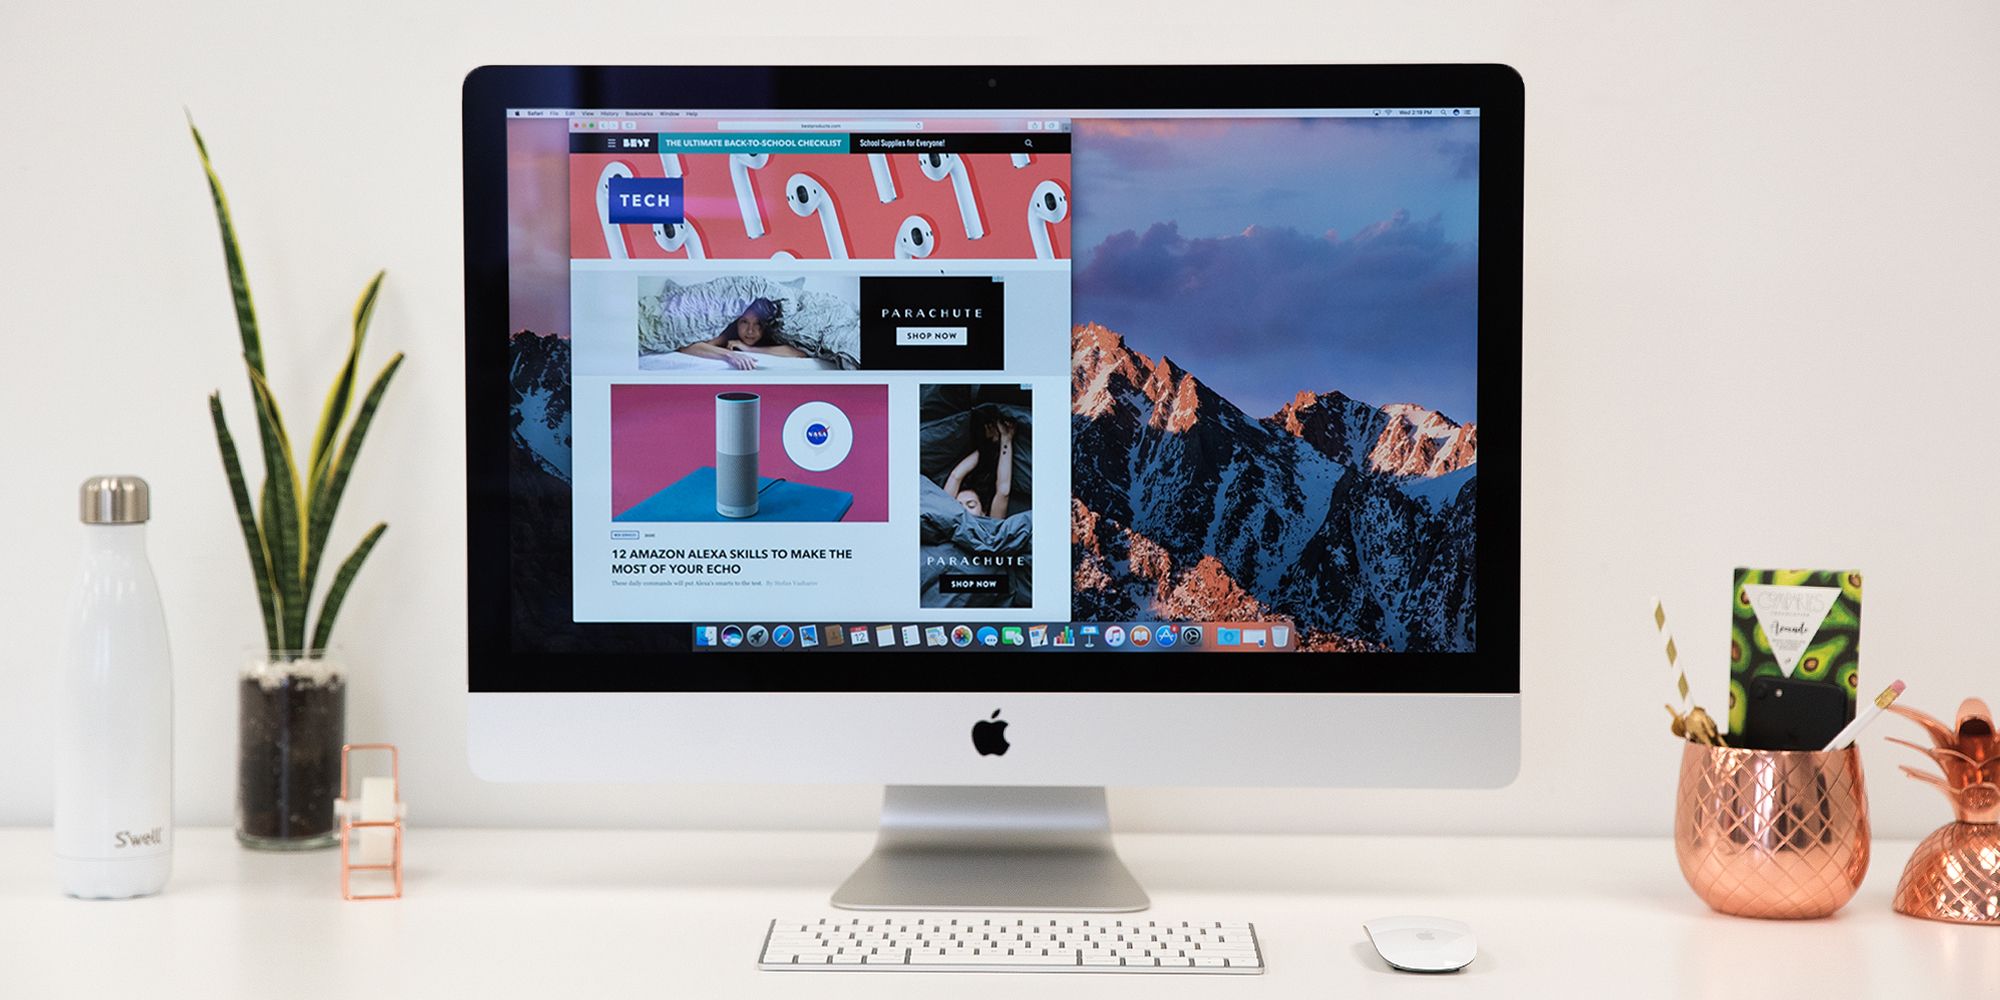 George Stevenson elefant a da foc  iMac 27-Inch With 5K Retina Review 2018 - Rating Apple's New iMac With 5K  Retina Display